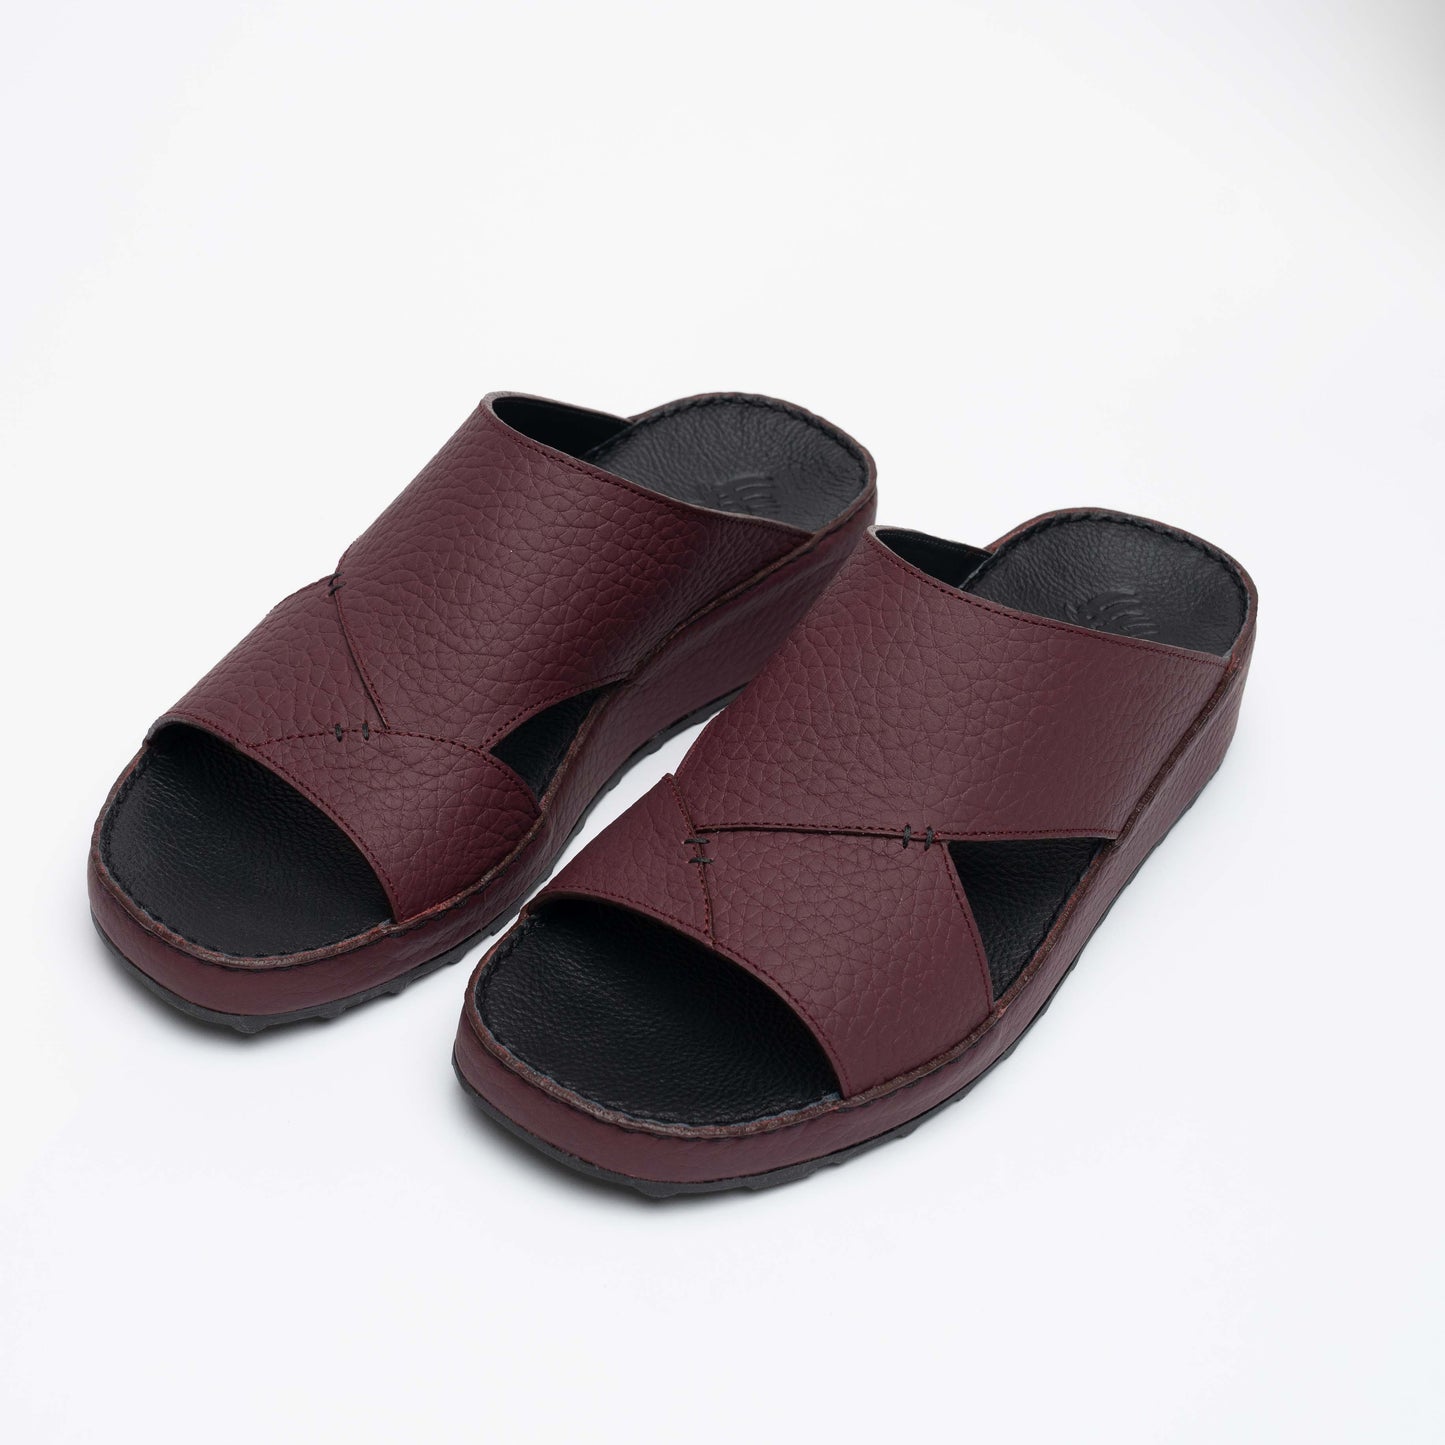 0221-Marron Arabic Male Sandals New Arrivals